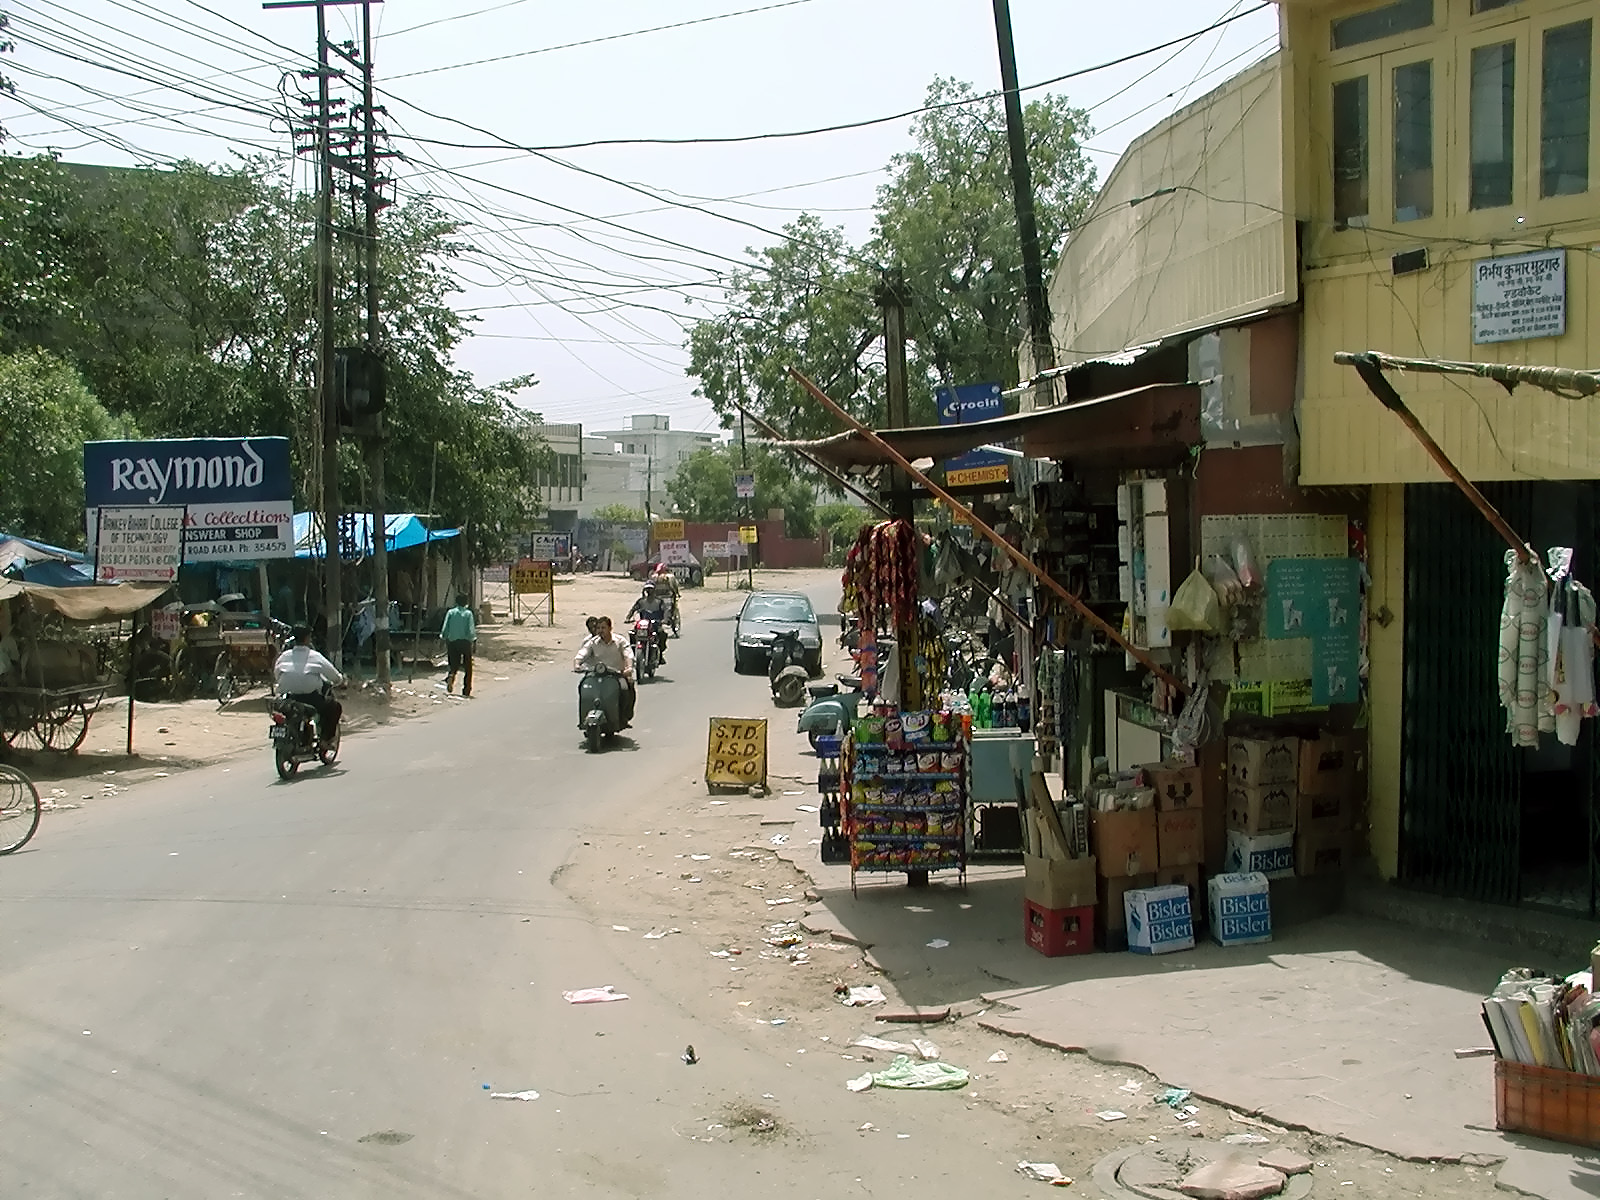 10-Jun-2001 11:14 - Agra - Street scene on the outskirts of Agra